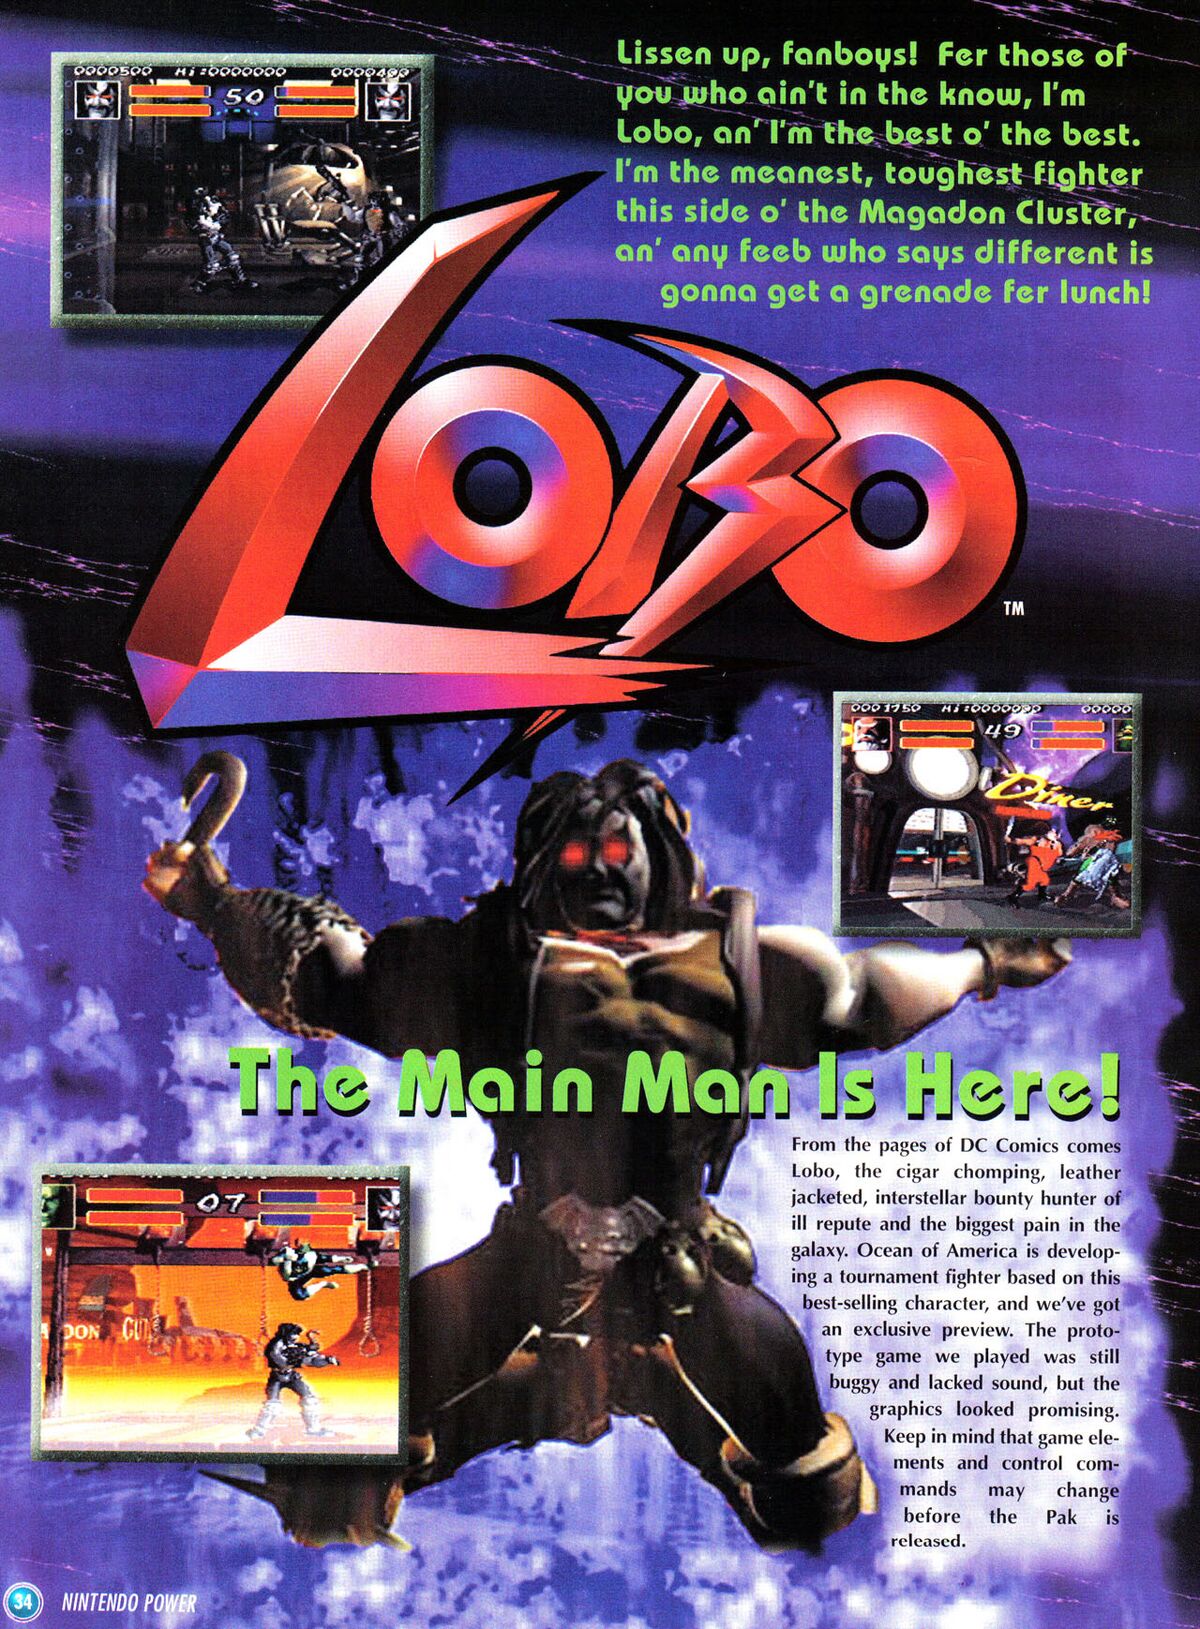 (found Super Nintendo/Sega Genesis fighting game; 1996) - The Lost Media